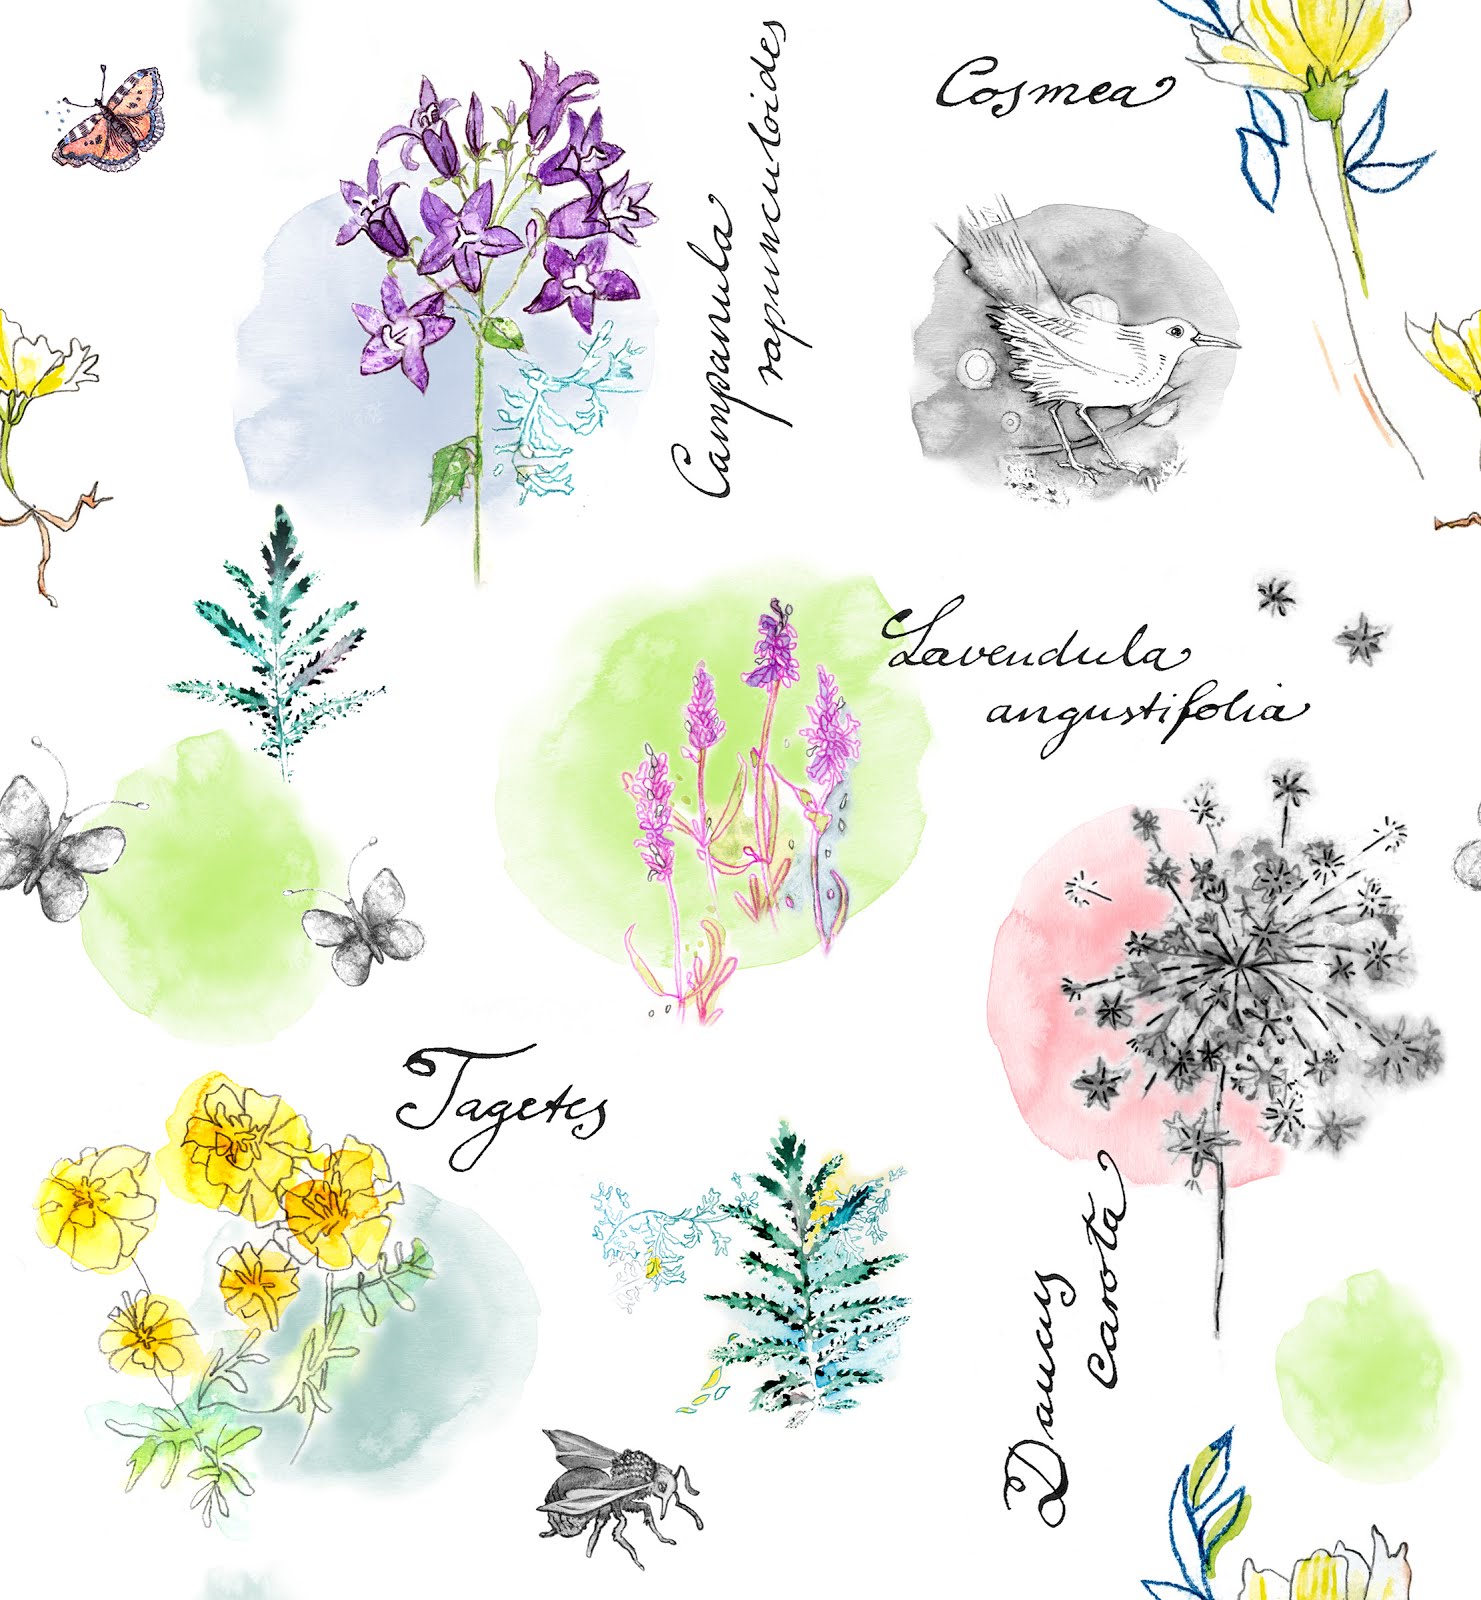 Fabric 8 "Botanical Sketchbook" semifinalist